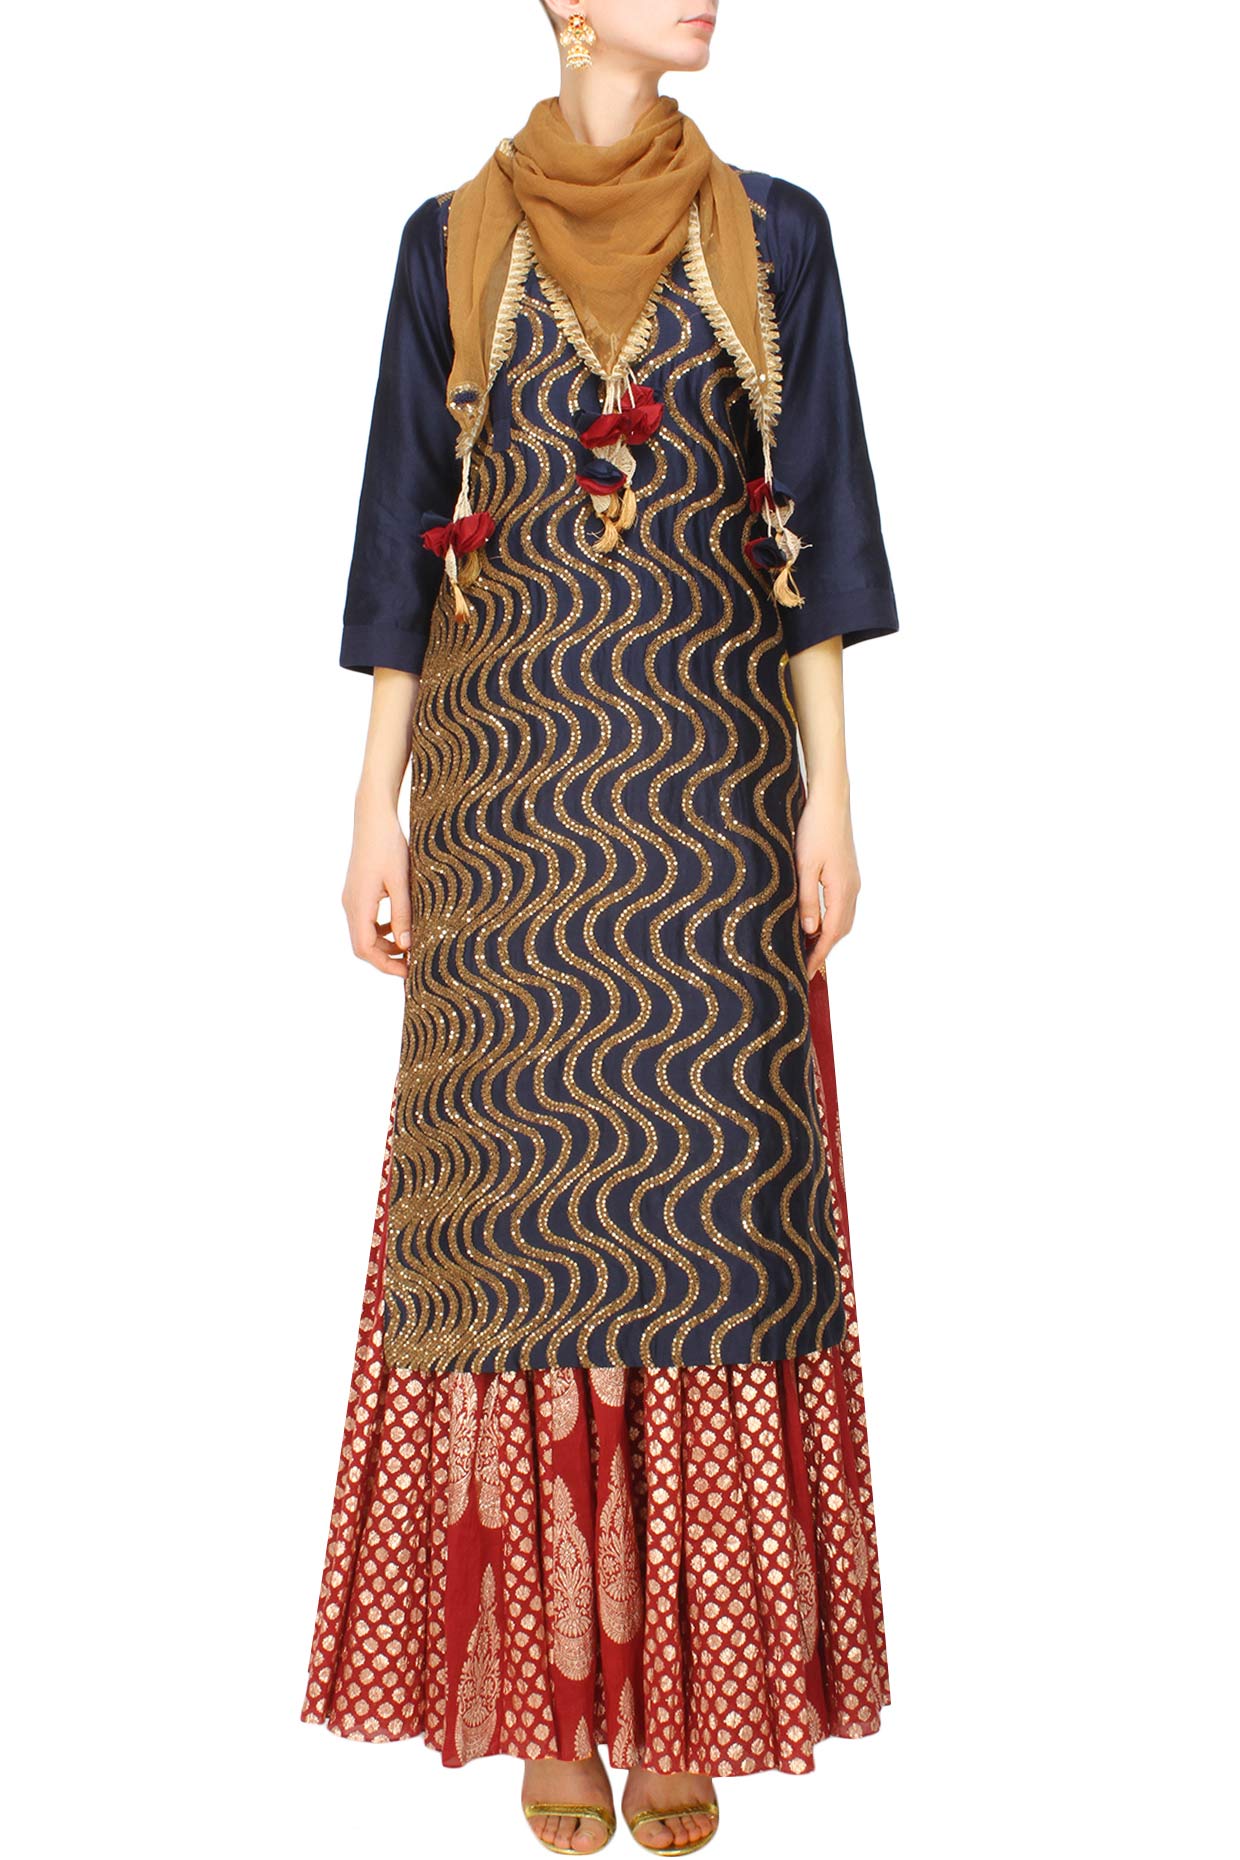 Buy Women's Banarasi Silk Brocade Chanderi Apple Pattern Lehenga Skirt(Red,28)  at Amazon.in